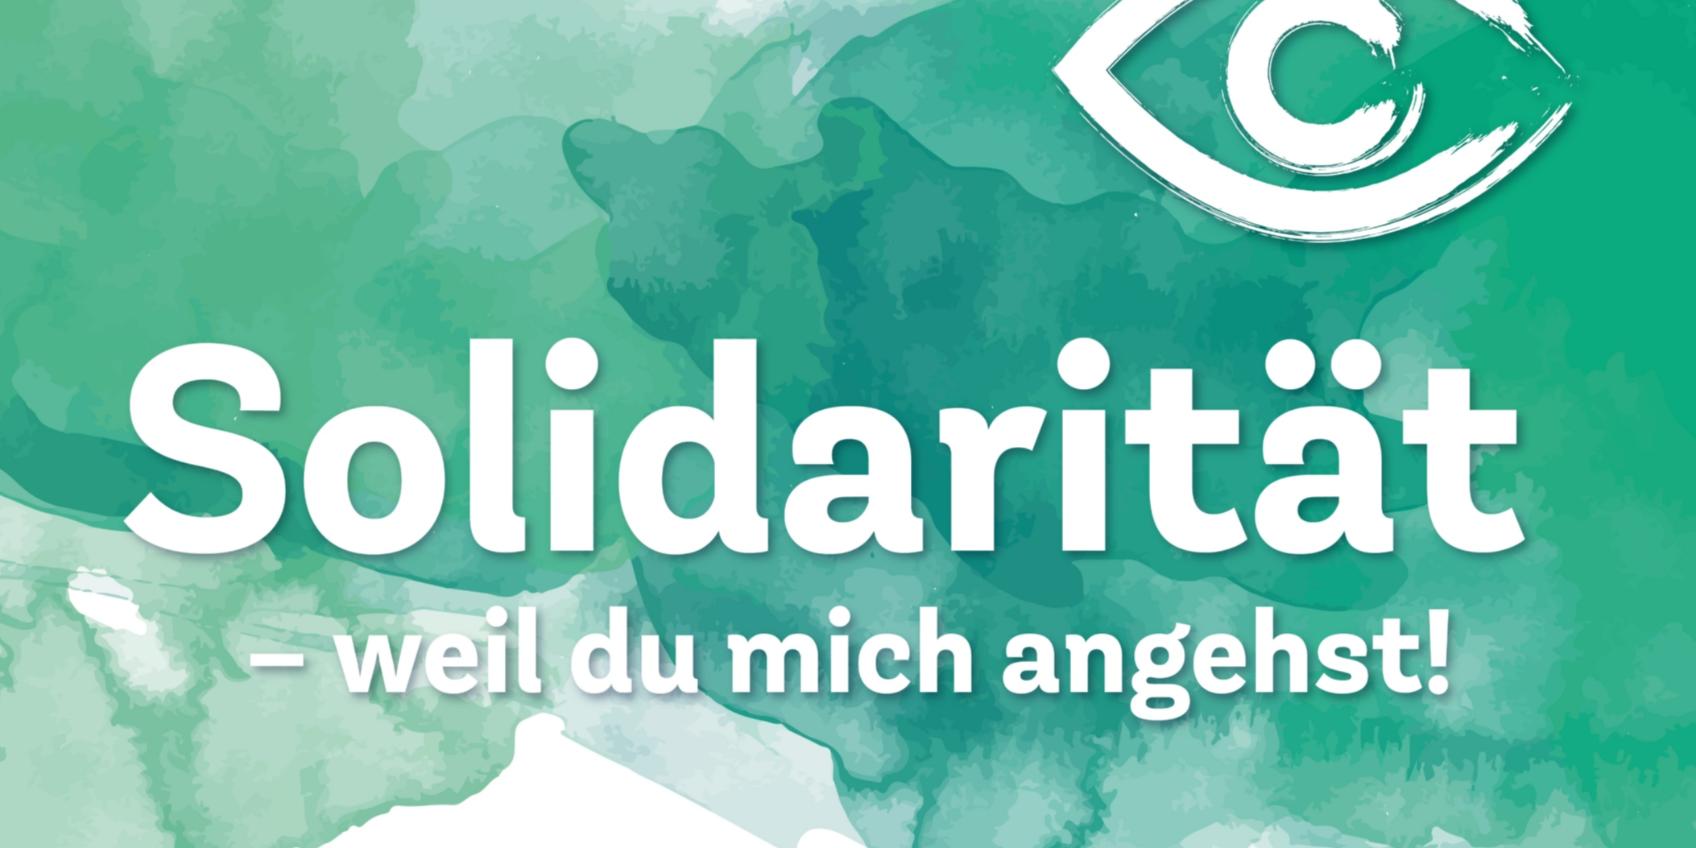 Solidaritätsfonds (c) Bistum Aachen